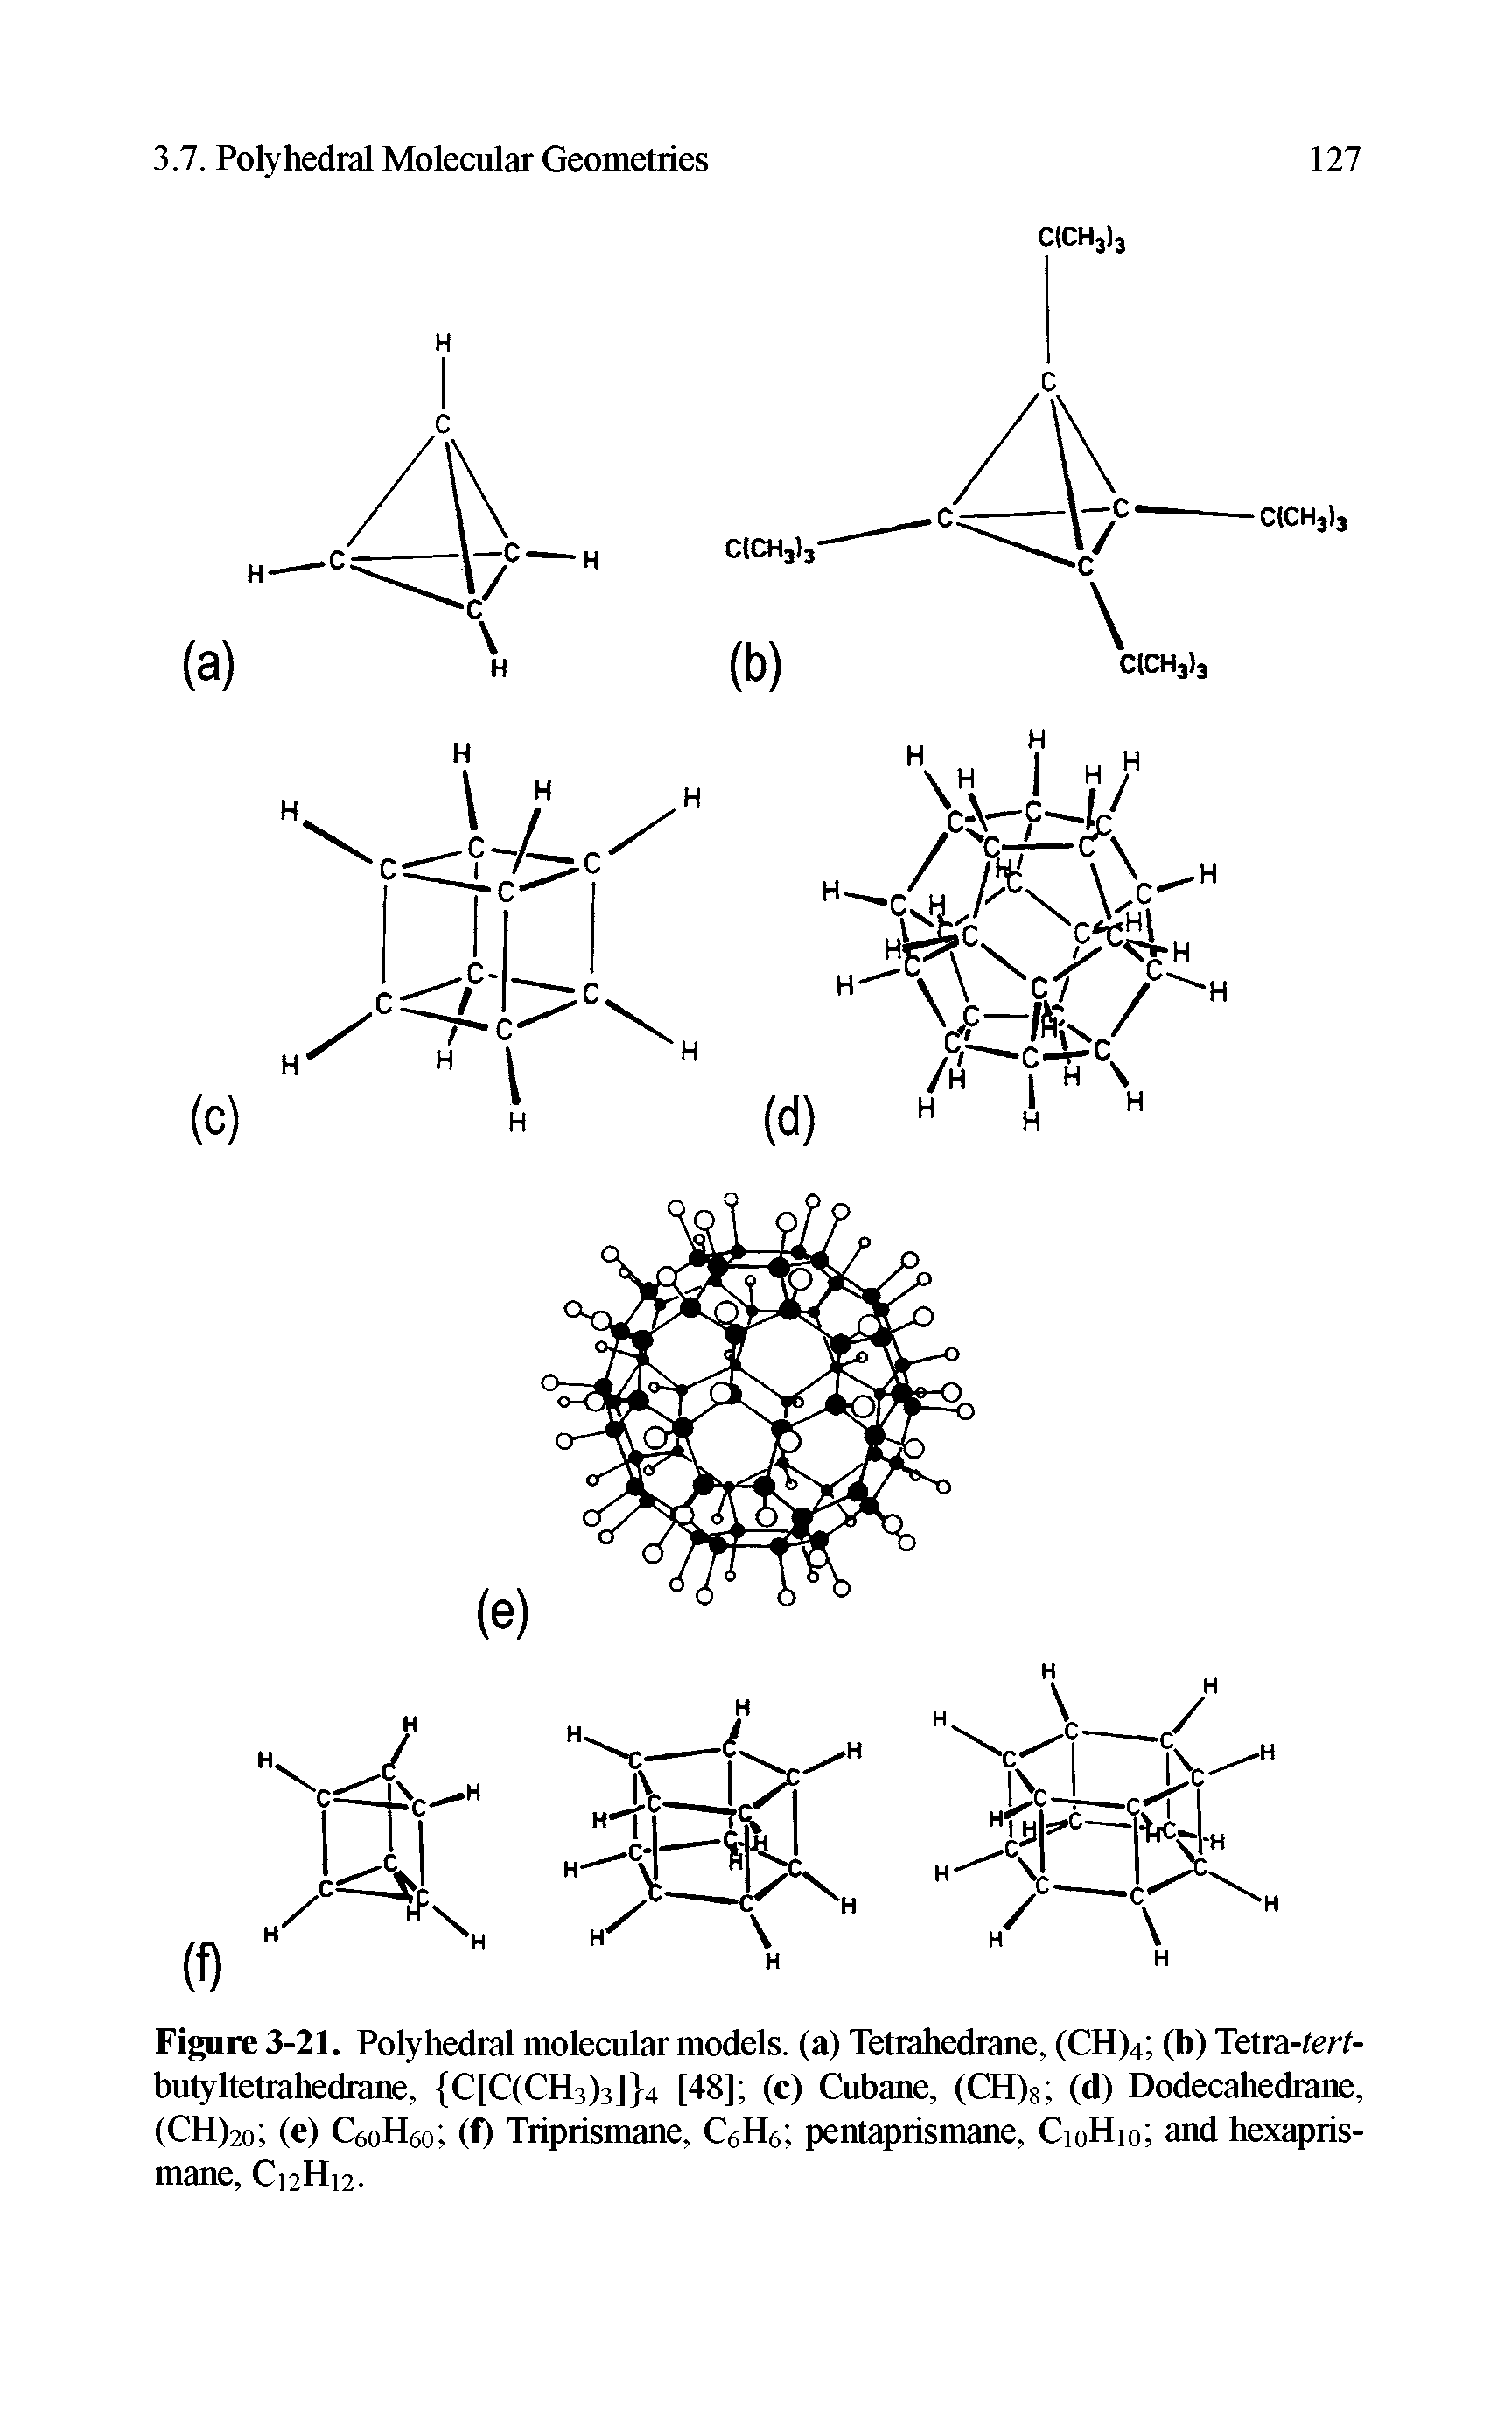 Figure 3-21. Polyhedral molecular models, (a) Tetrahedrane, (CH)4 (b) Tetra-tert-butyltetrahedrane, C[C(CH3)3] 4 [48] (c) Cubane, (CH)S (d) Dodecahedrane, (CH)2o (e) CeoHgo (f) Triprismane, C6H6 pentaprismane, CioHi0 and hexapris-mane, Ci2H12.